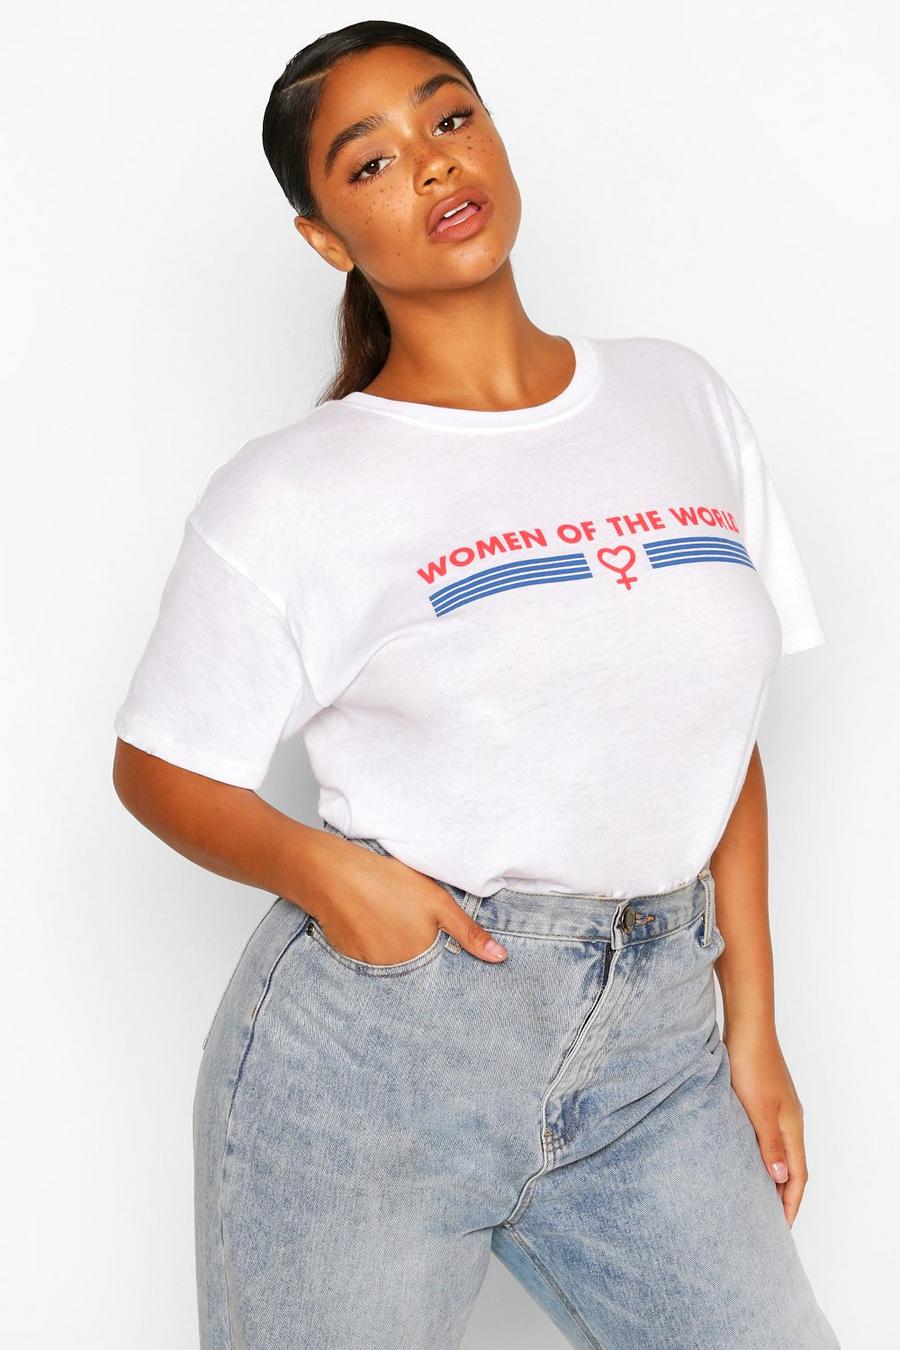 Plus Women Of The World Slogan T-shirt image number 1